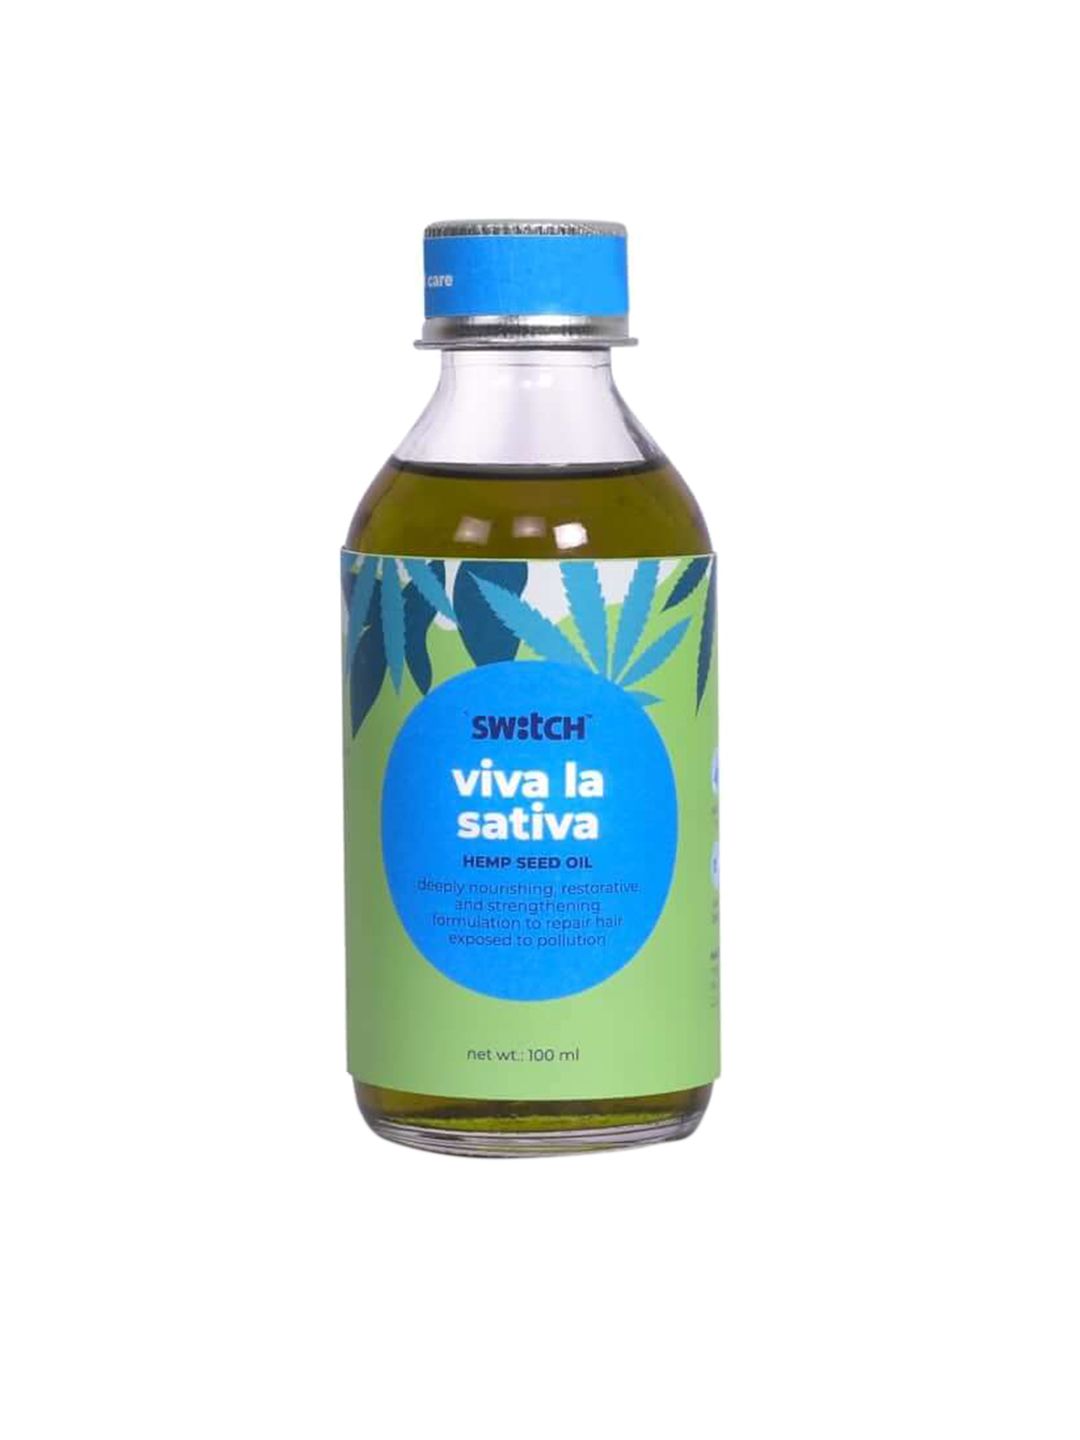 The Switch Fix Viva La Sativa Hemp Seed Hair Oil with Coconut Oil 100 ml Price in India